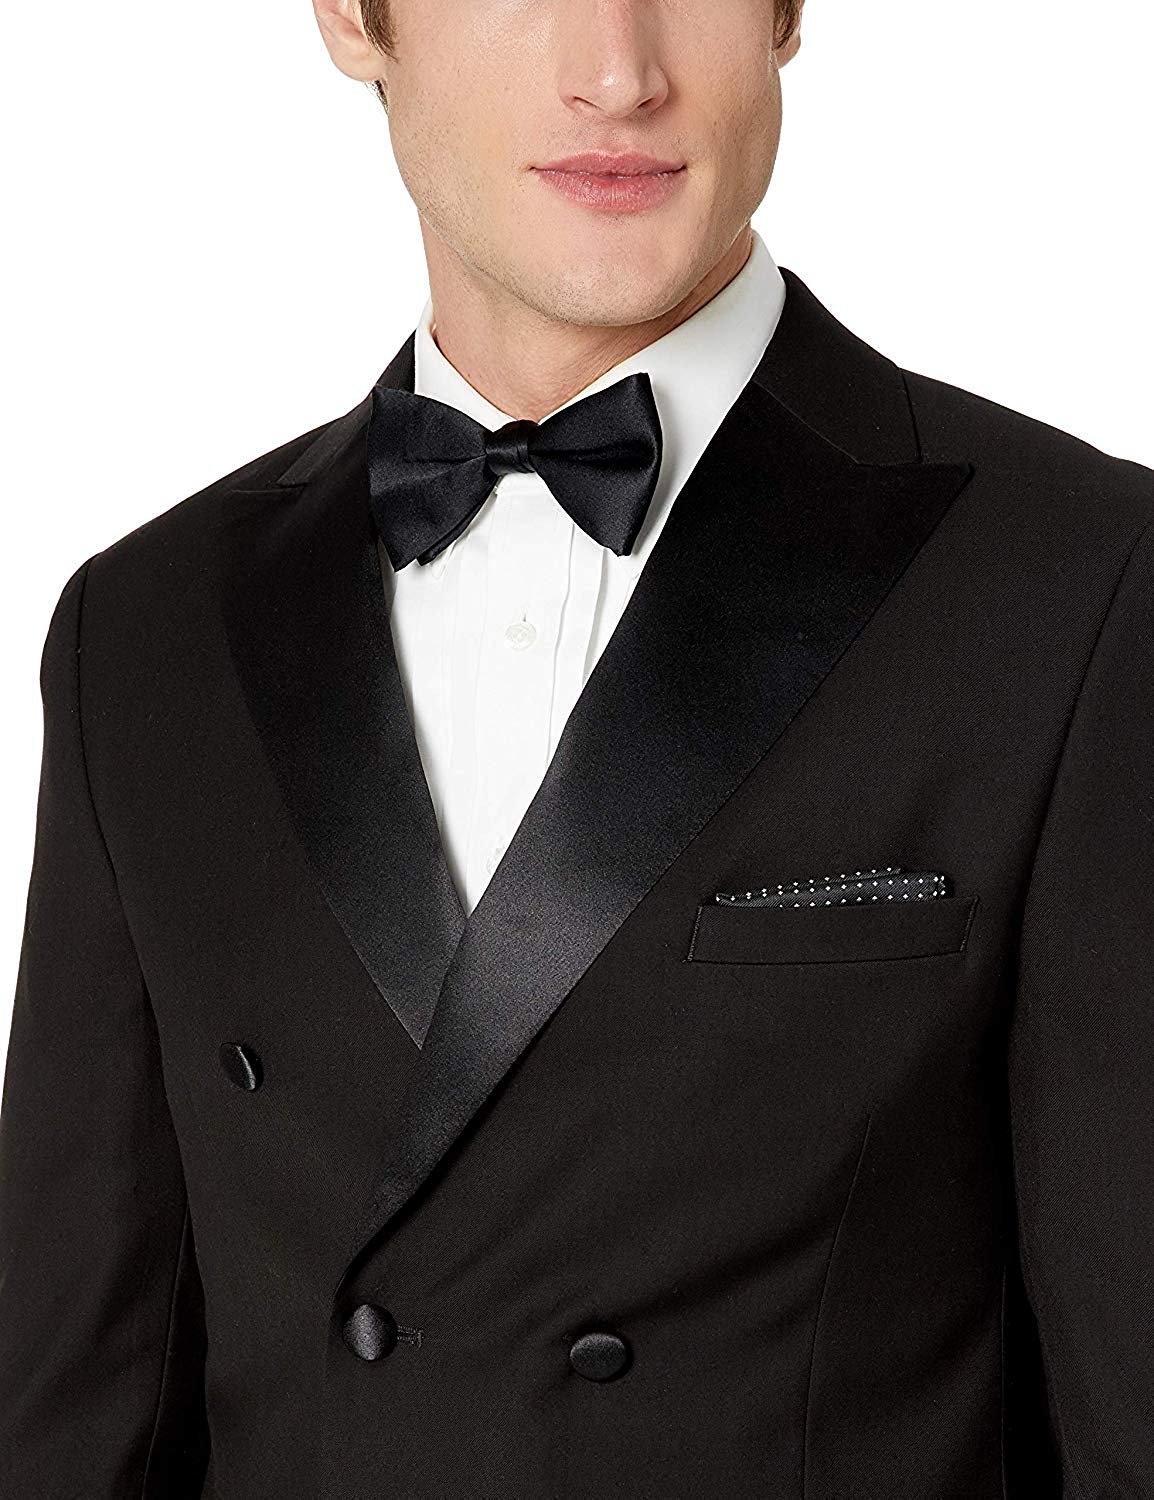 Adam Baker Men's 91003 Regular Fit 2-Piece Double Breasted Shawl Collar Tuxedo - Black - 38S - image 3 of 5